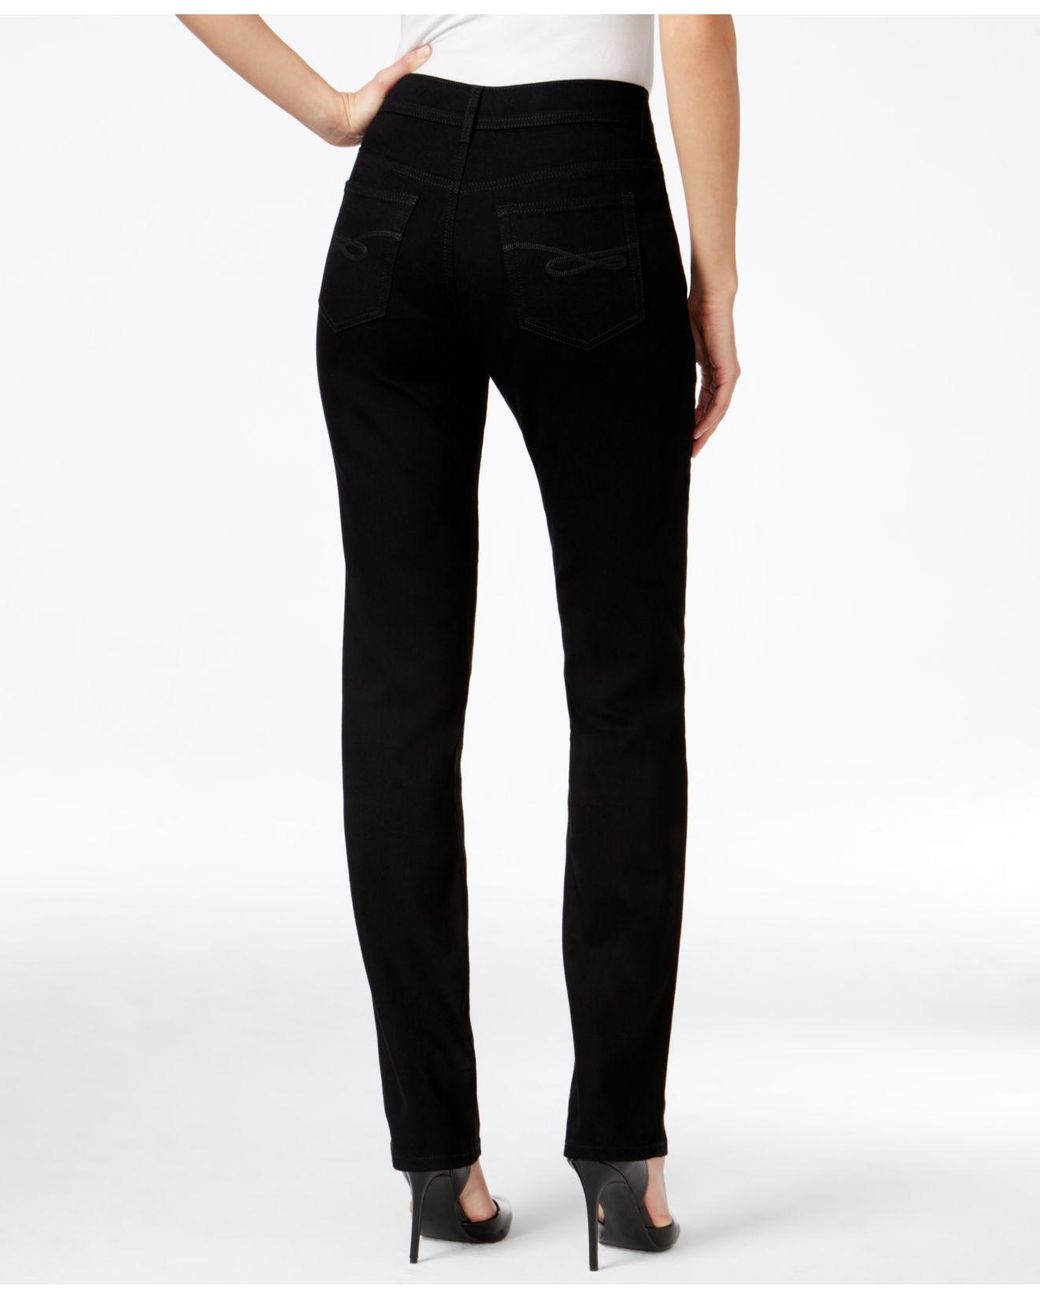 Jeans New Straight Leg Women Pants Tummy Control high rise Black Style & Co 